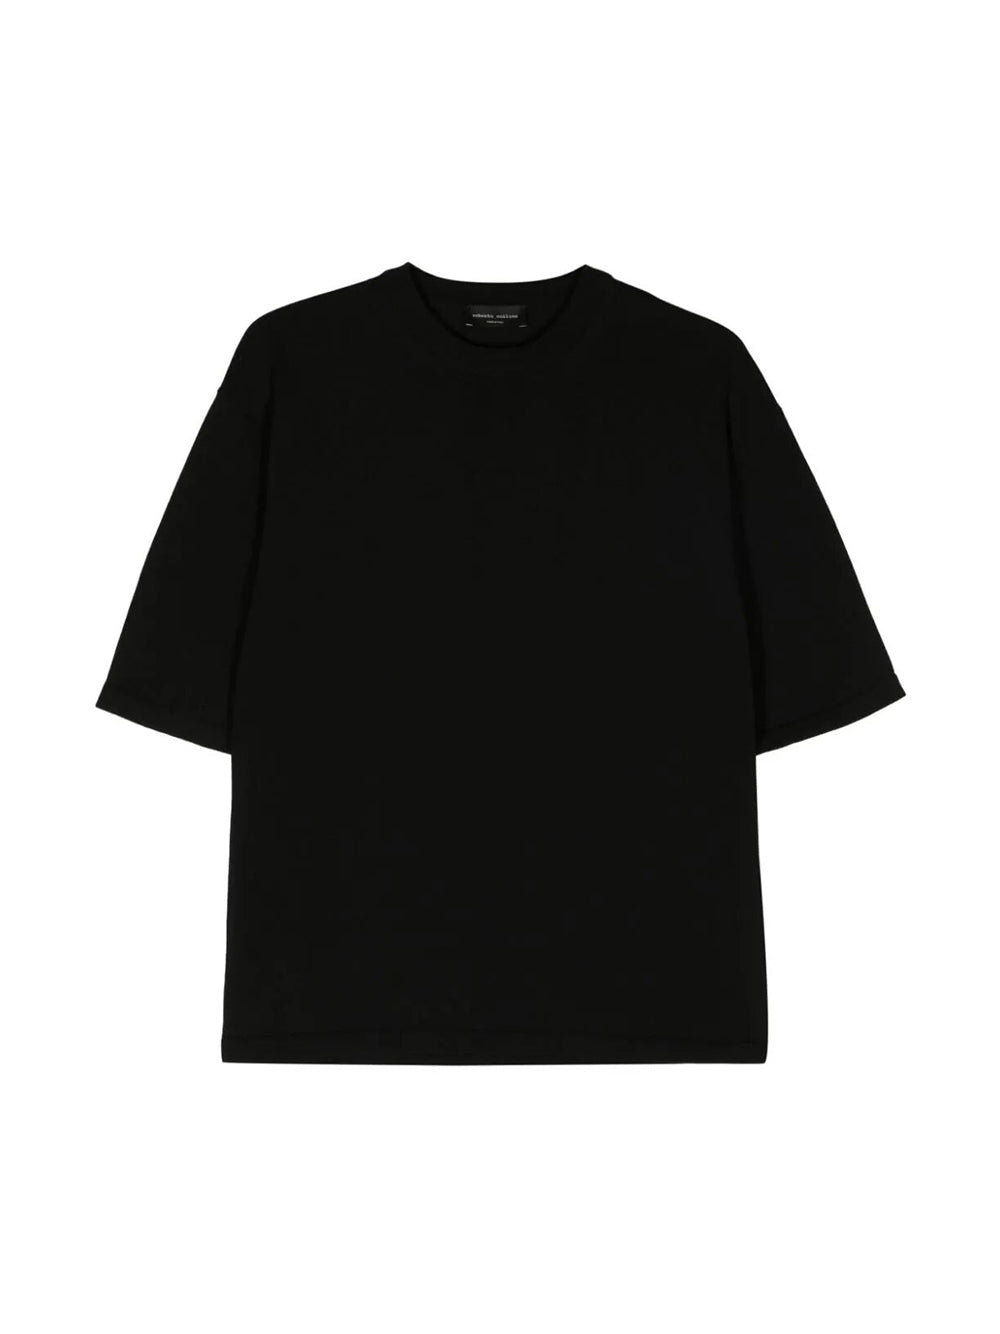 Black crewneck t-shirt